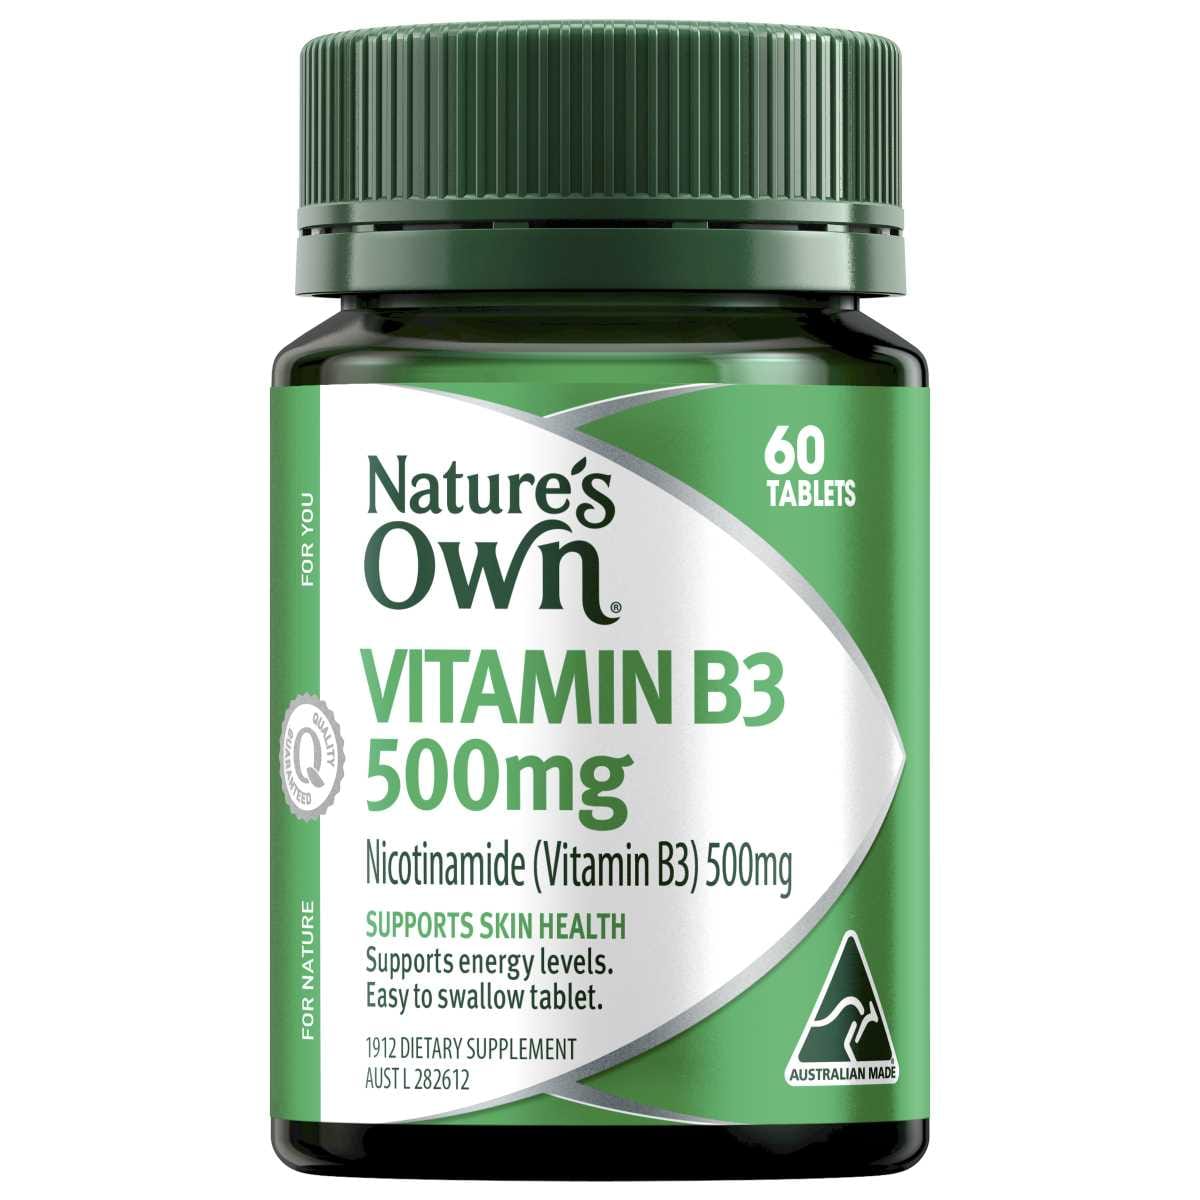 Natures Own Vitamin B3 500mg 60 Tablets Australia